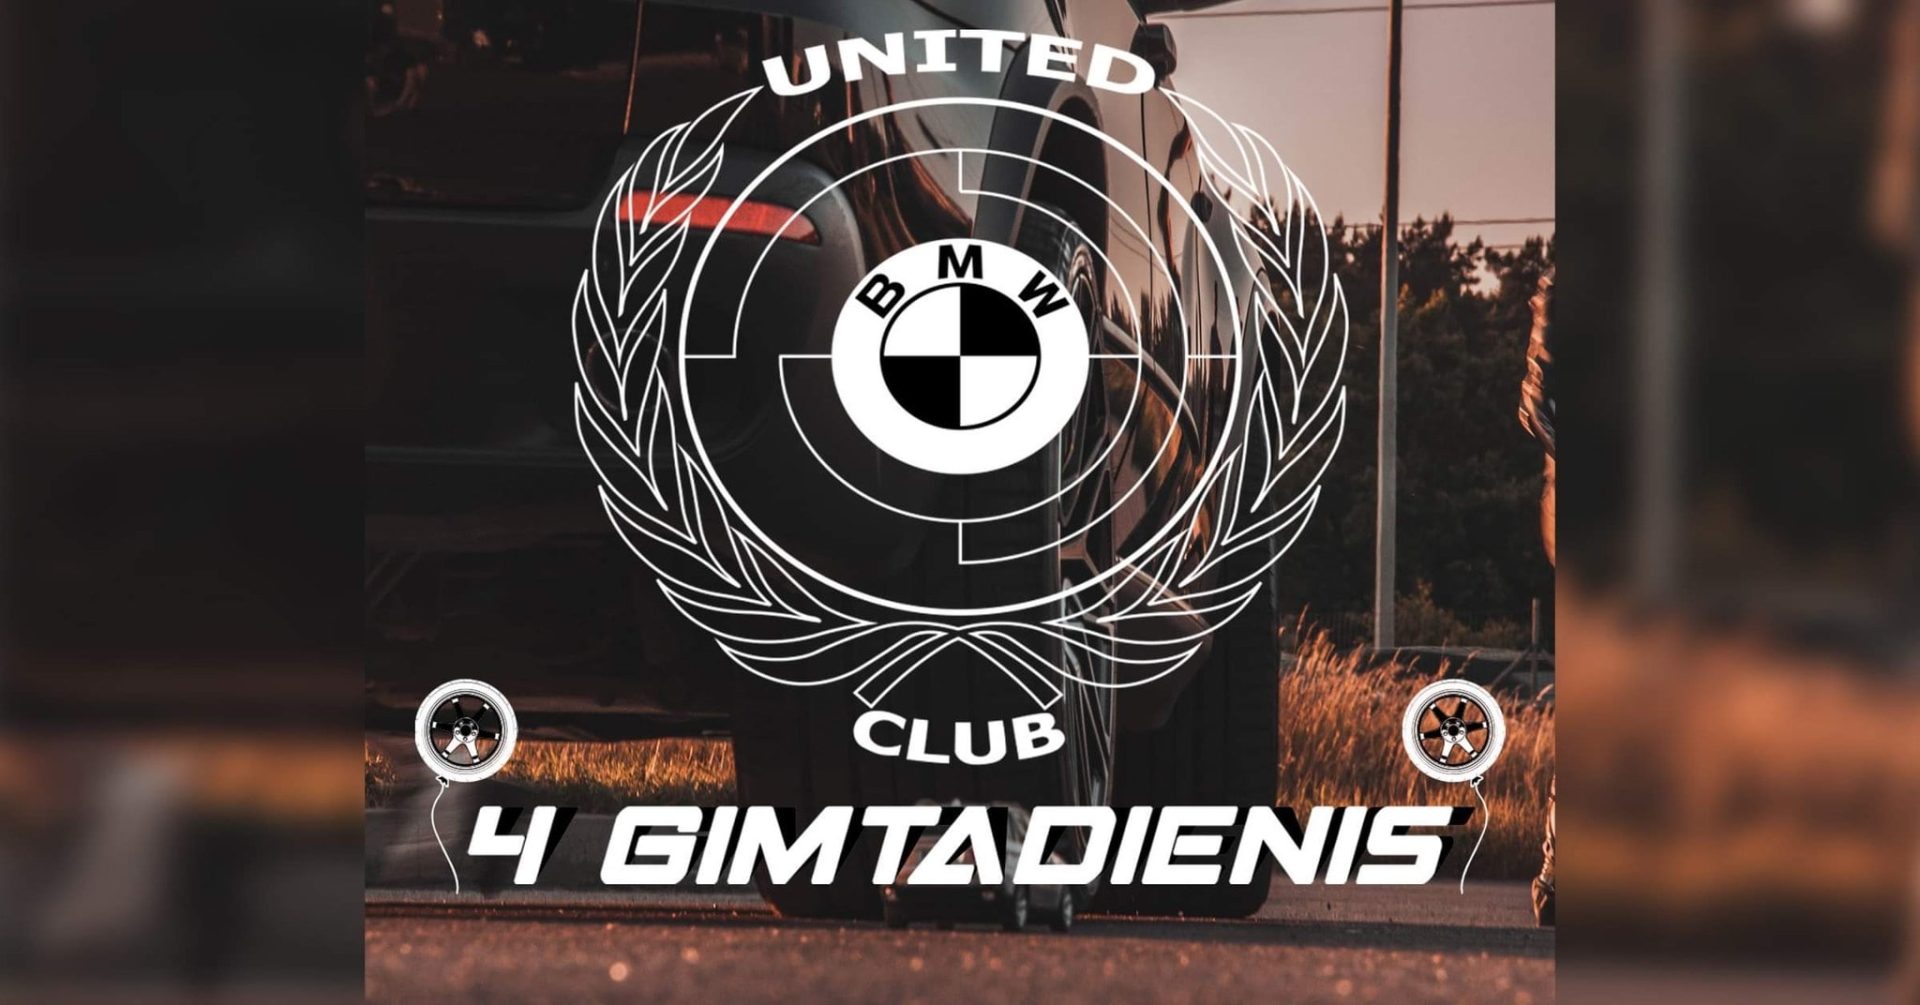 United BMW club - 4 gimtadienis